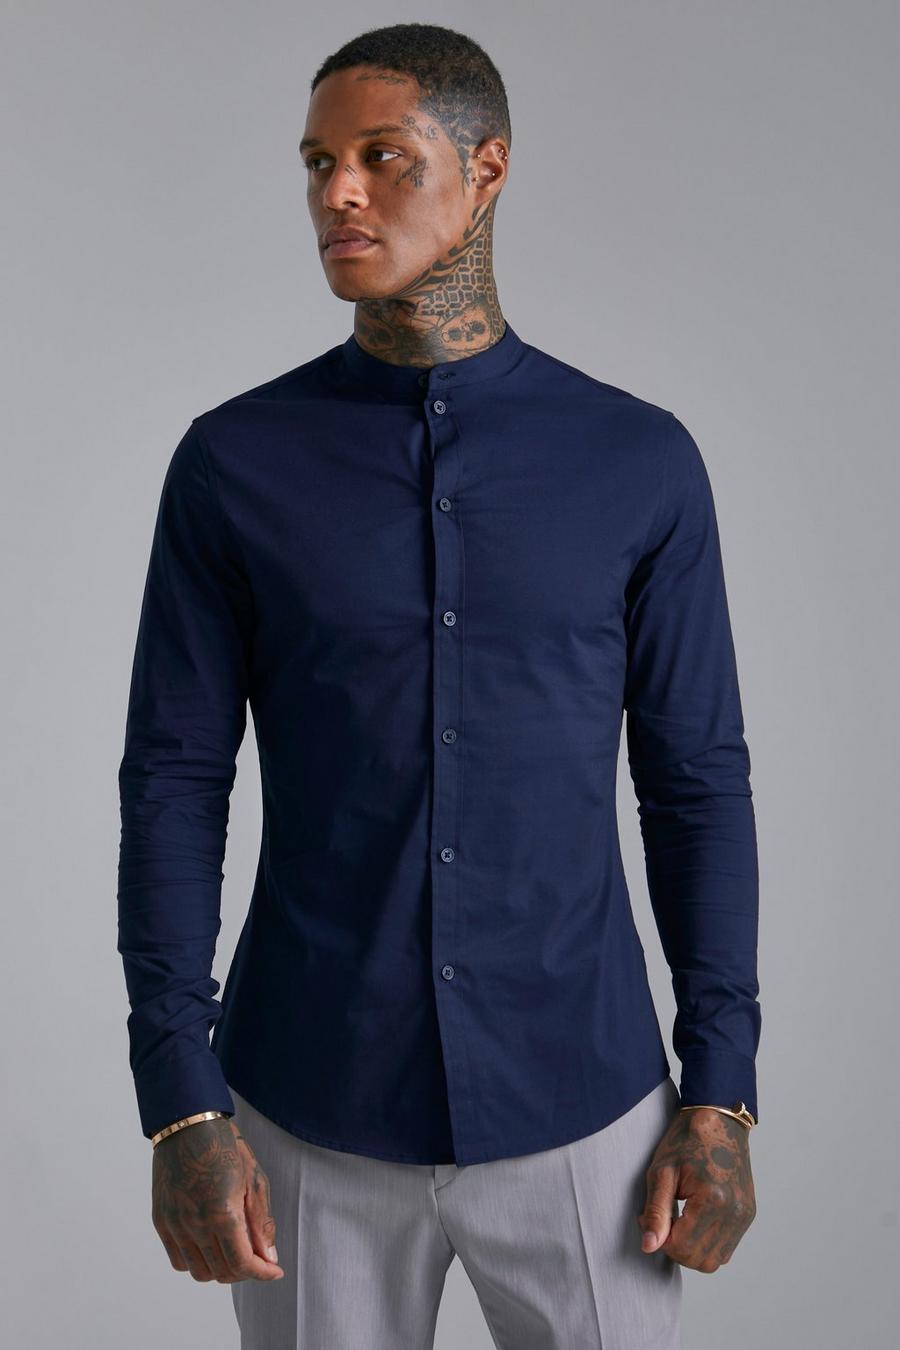 Navy azul marino Long Sleeve Grandad Muscle Shirt